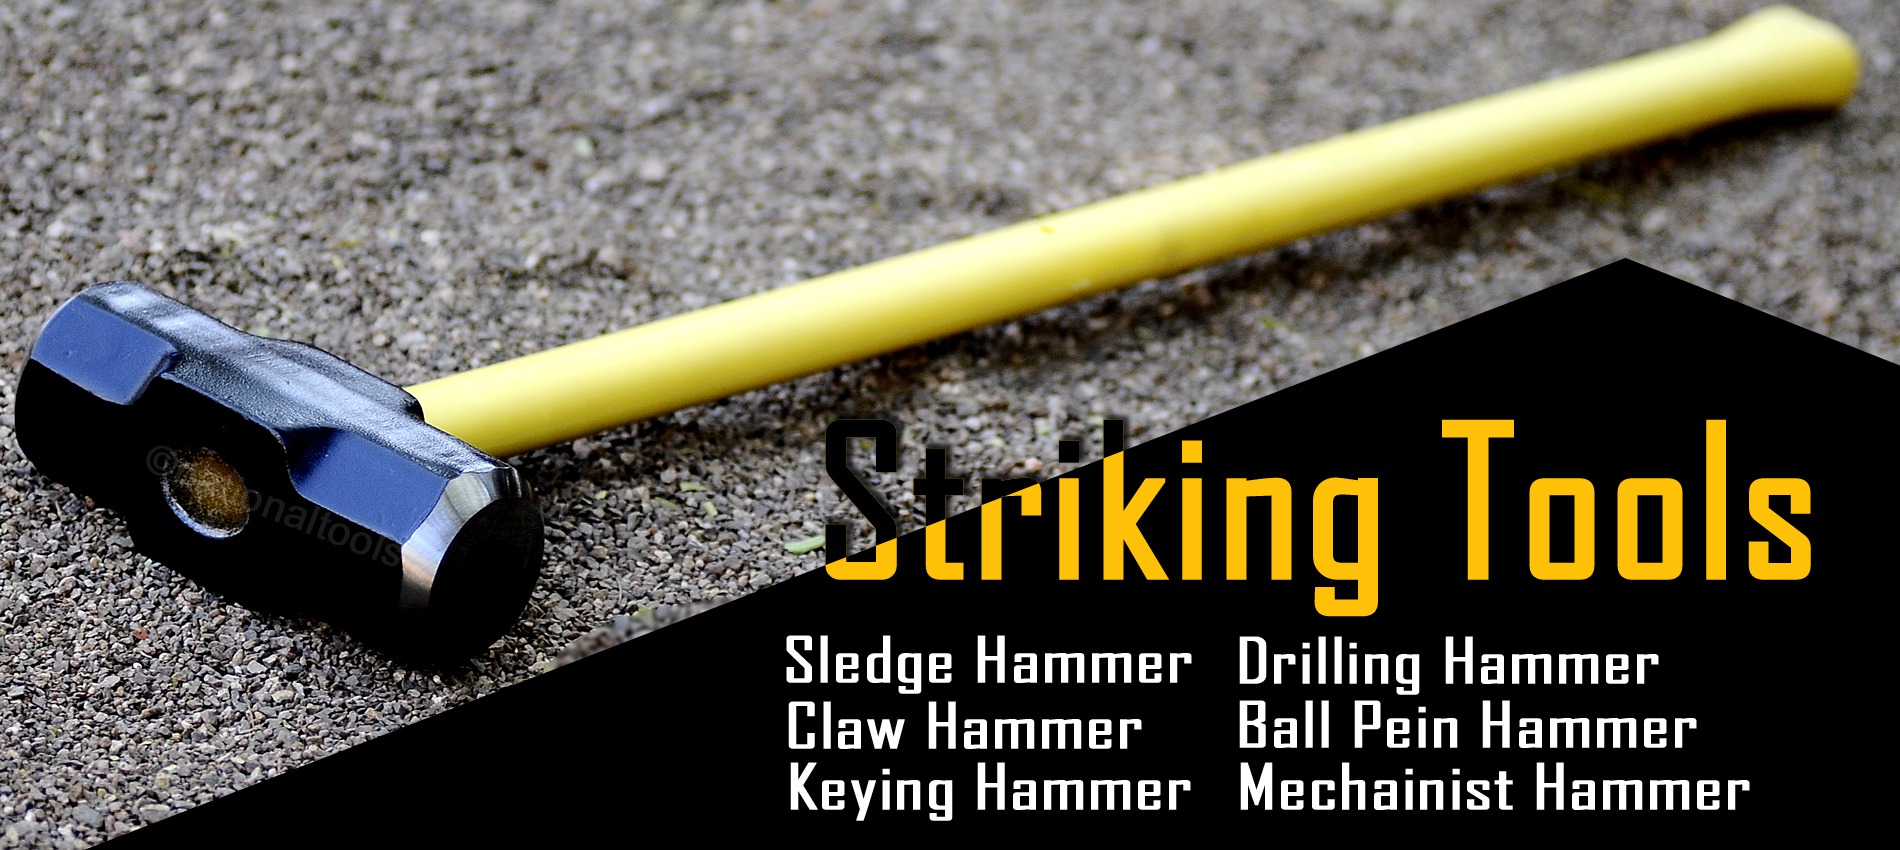 striking tools